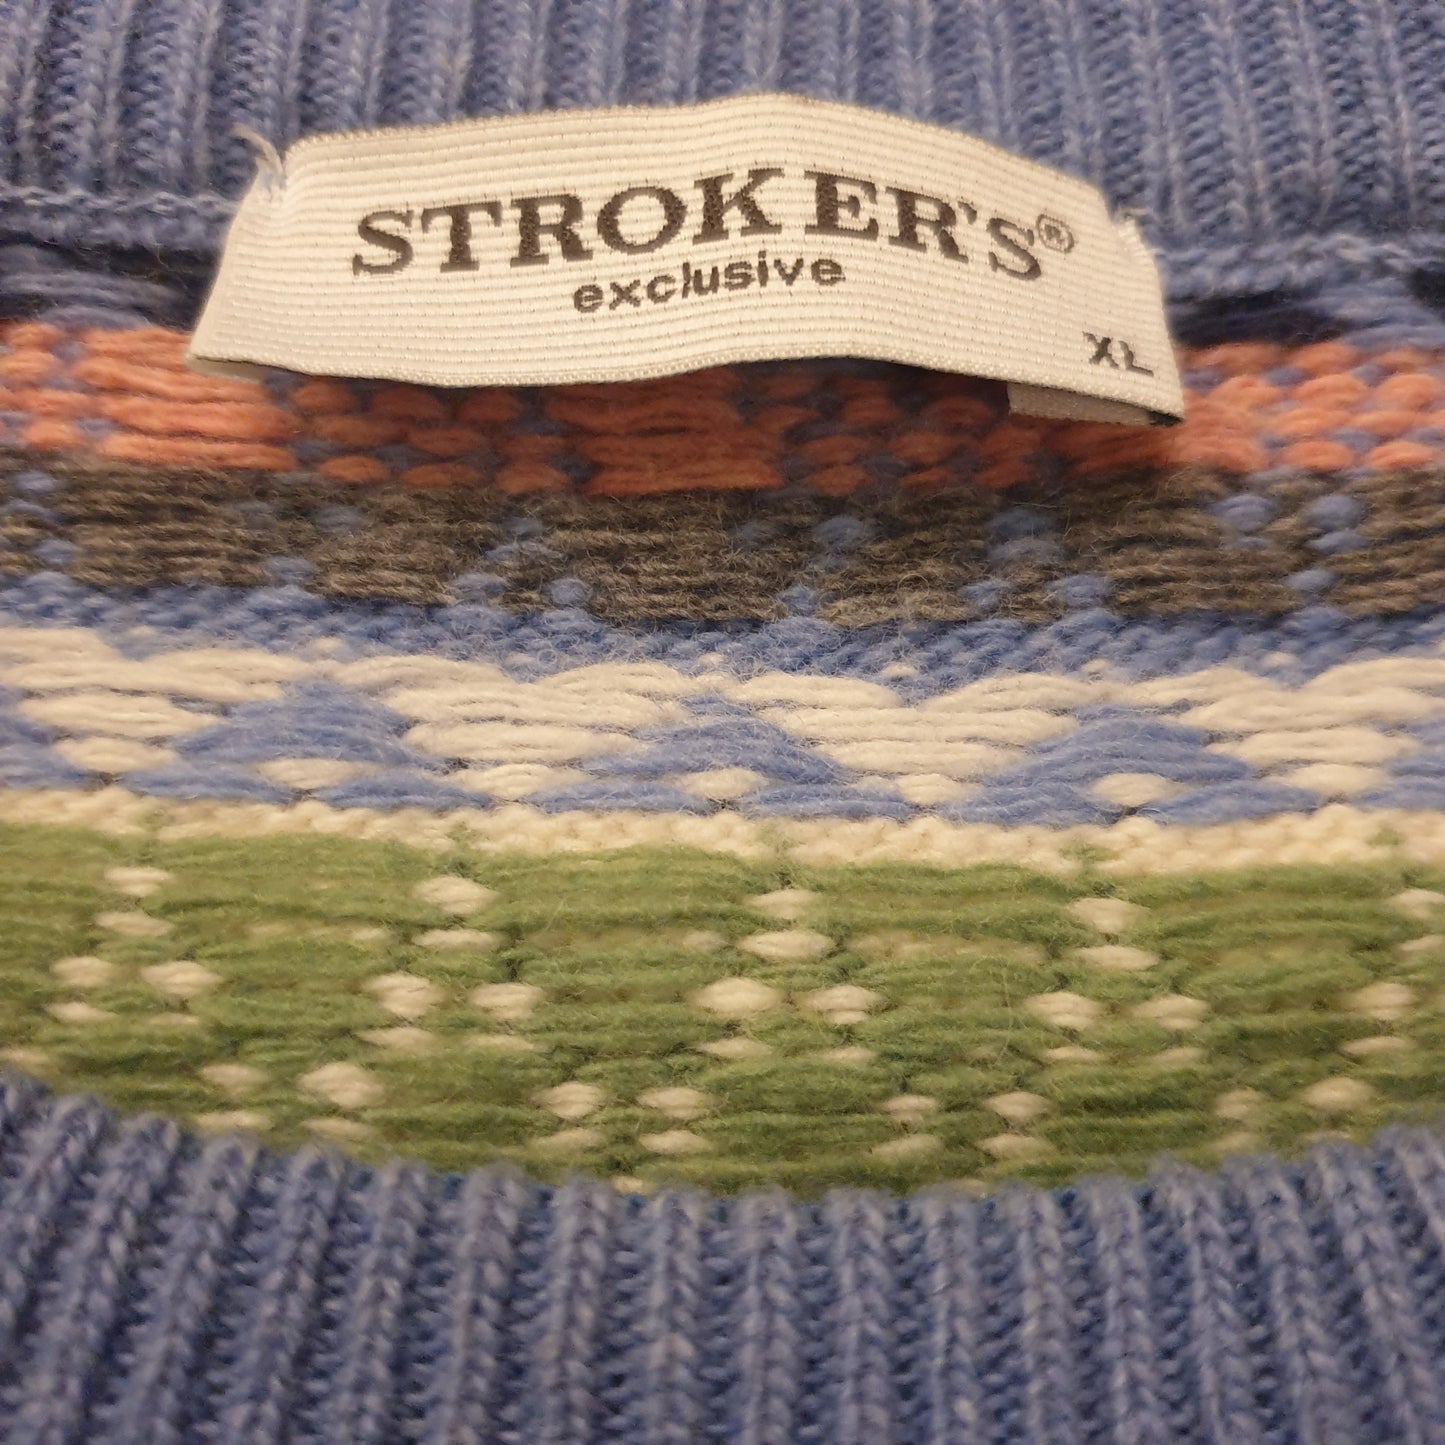 STROKER'S Warm Sweater XL